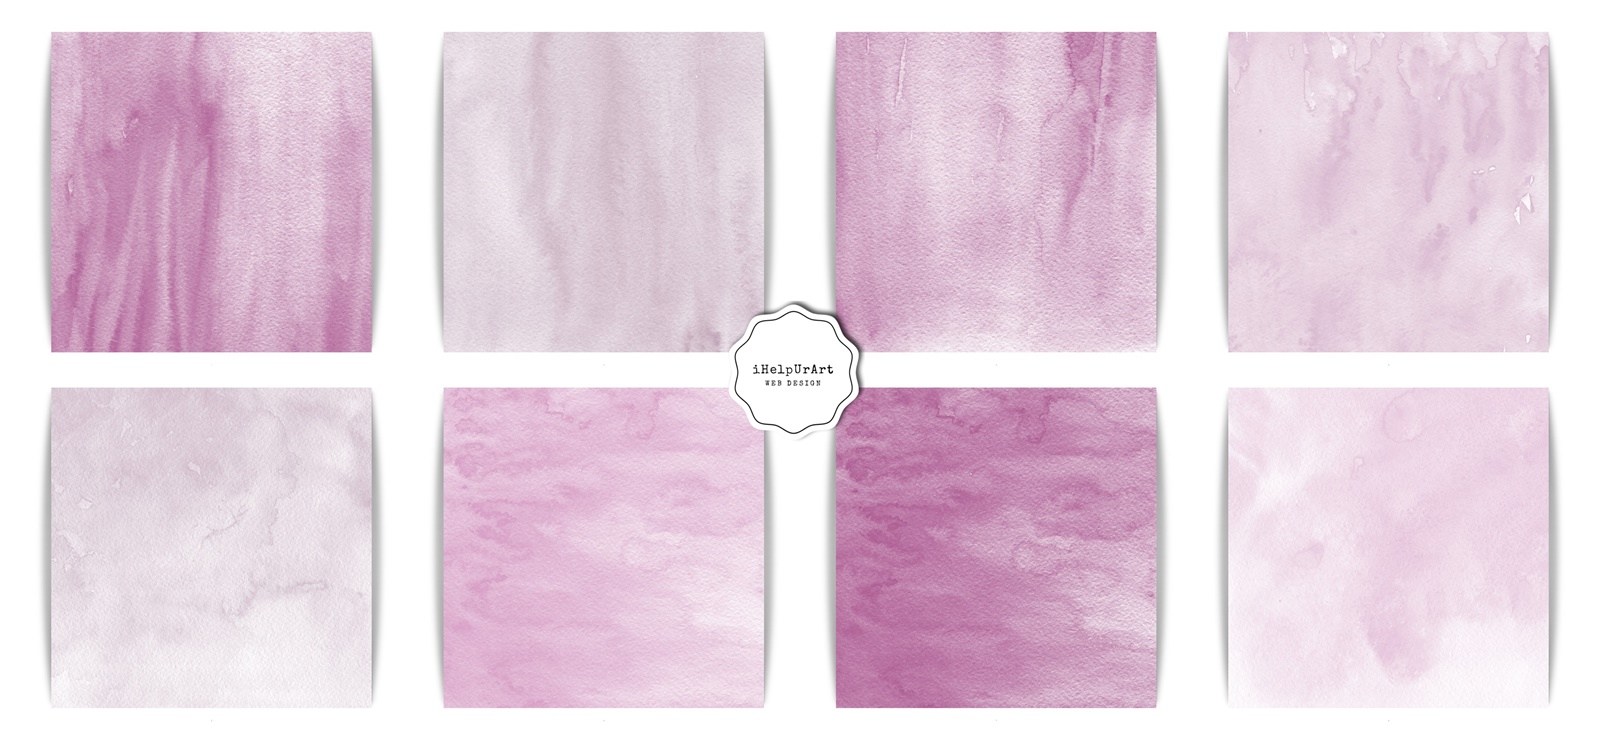 紫罗兰色水彩纹理包 Violets Watercolor Textures Pack插图1